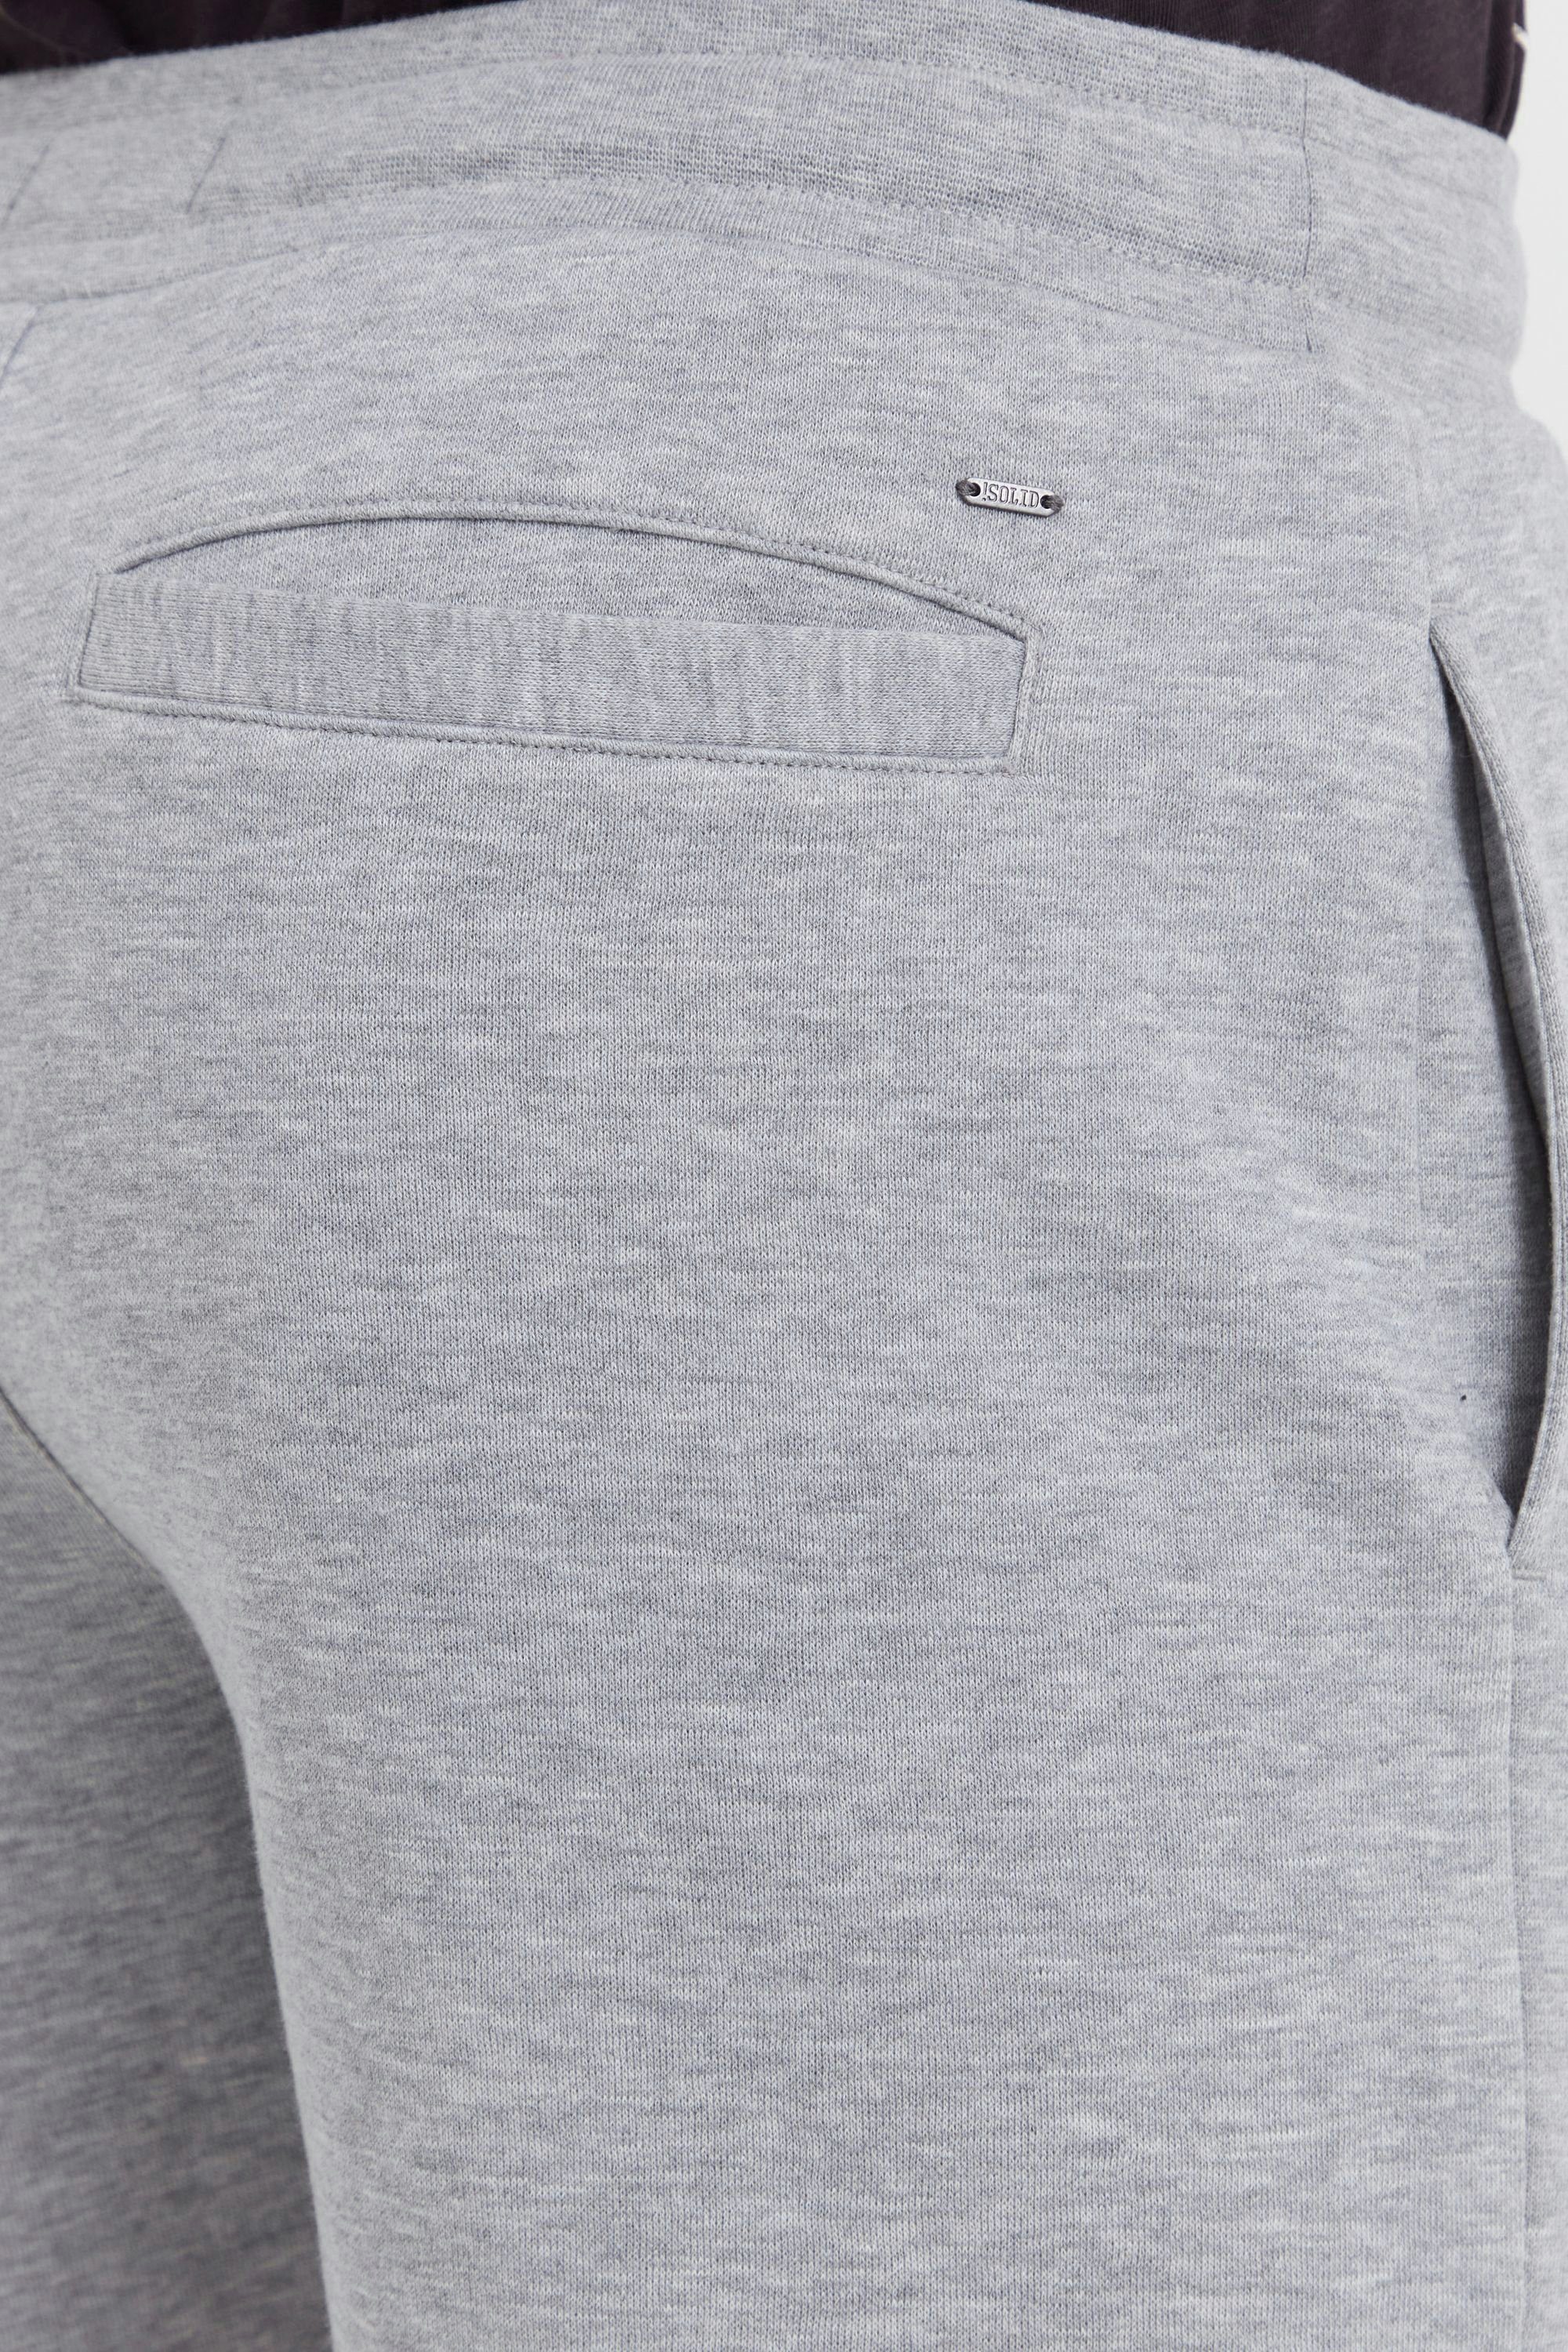 Sweat Melange Grey Shorts Light (1541011) mit Sweatshorts SDOliver Kordeln !Solid Basic